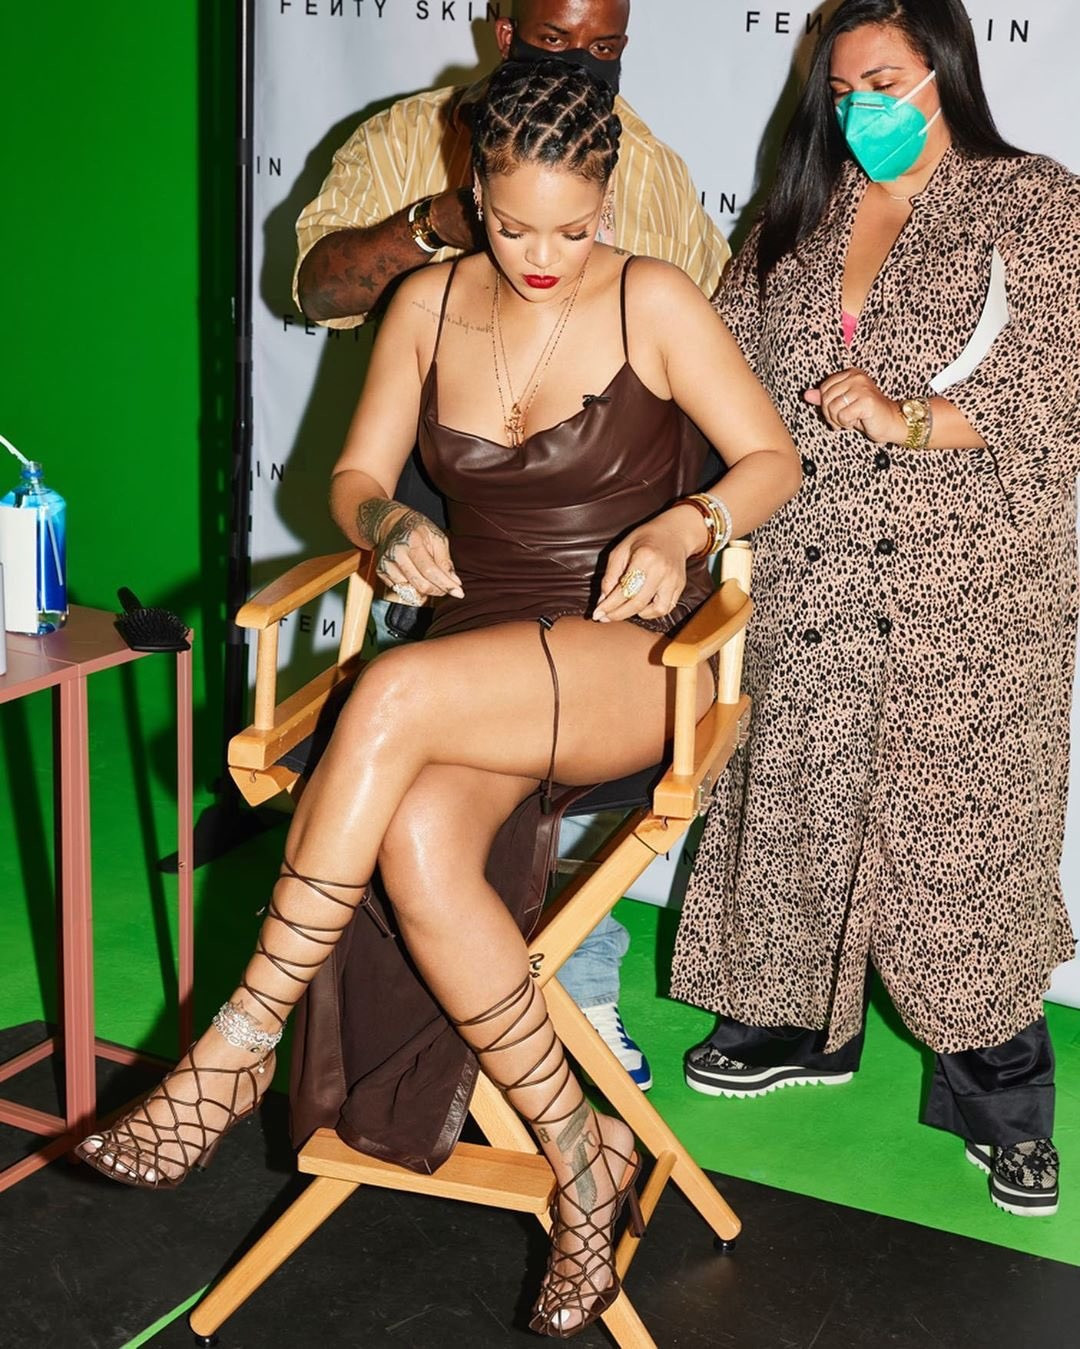 Рианна (Rihanna)